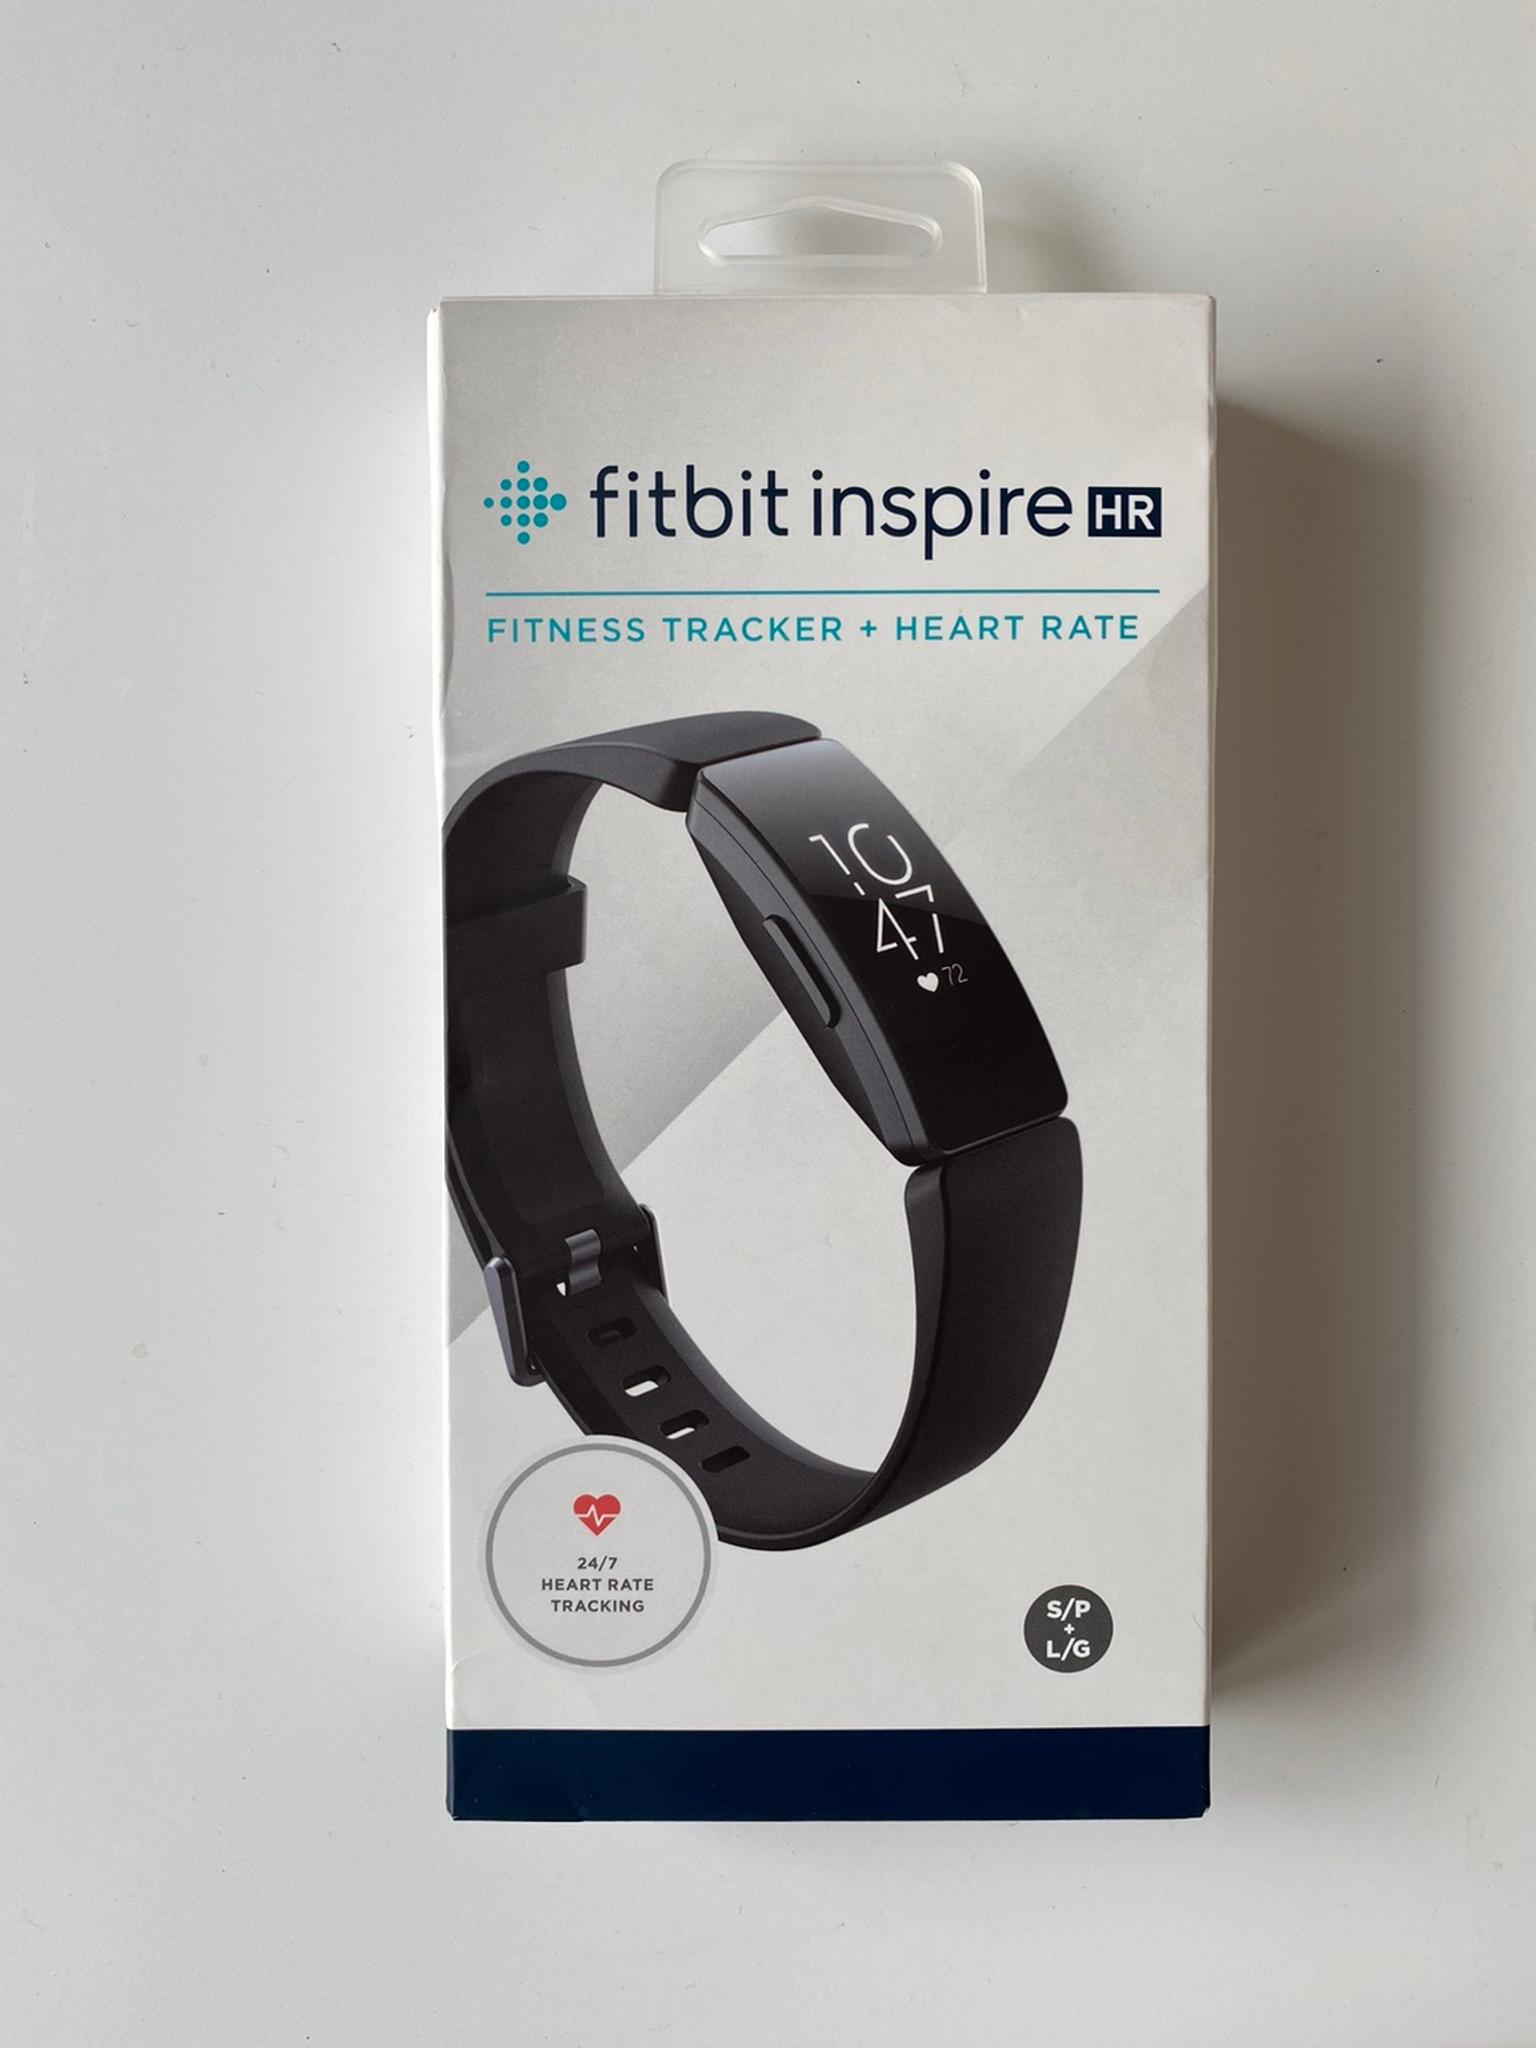 fitbit inspire hr packaging